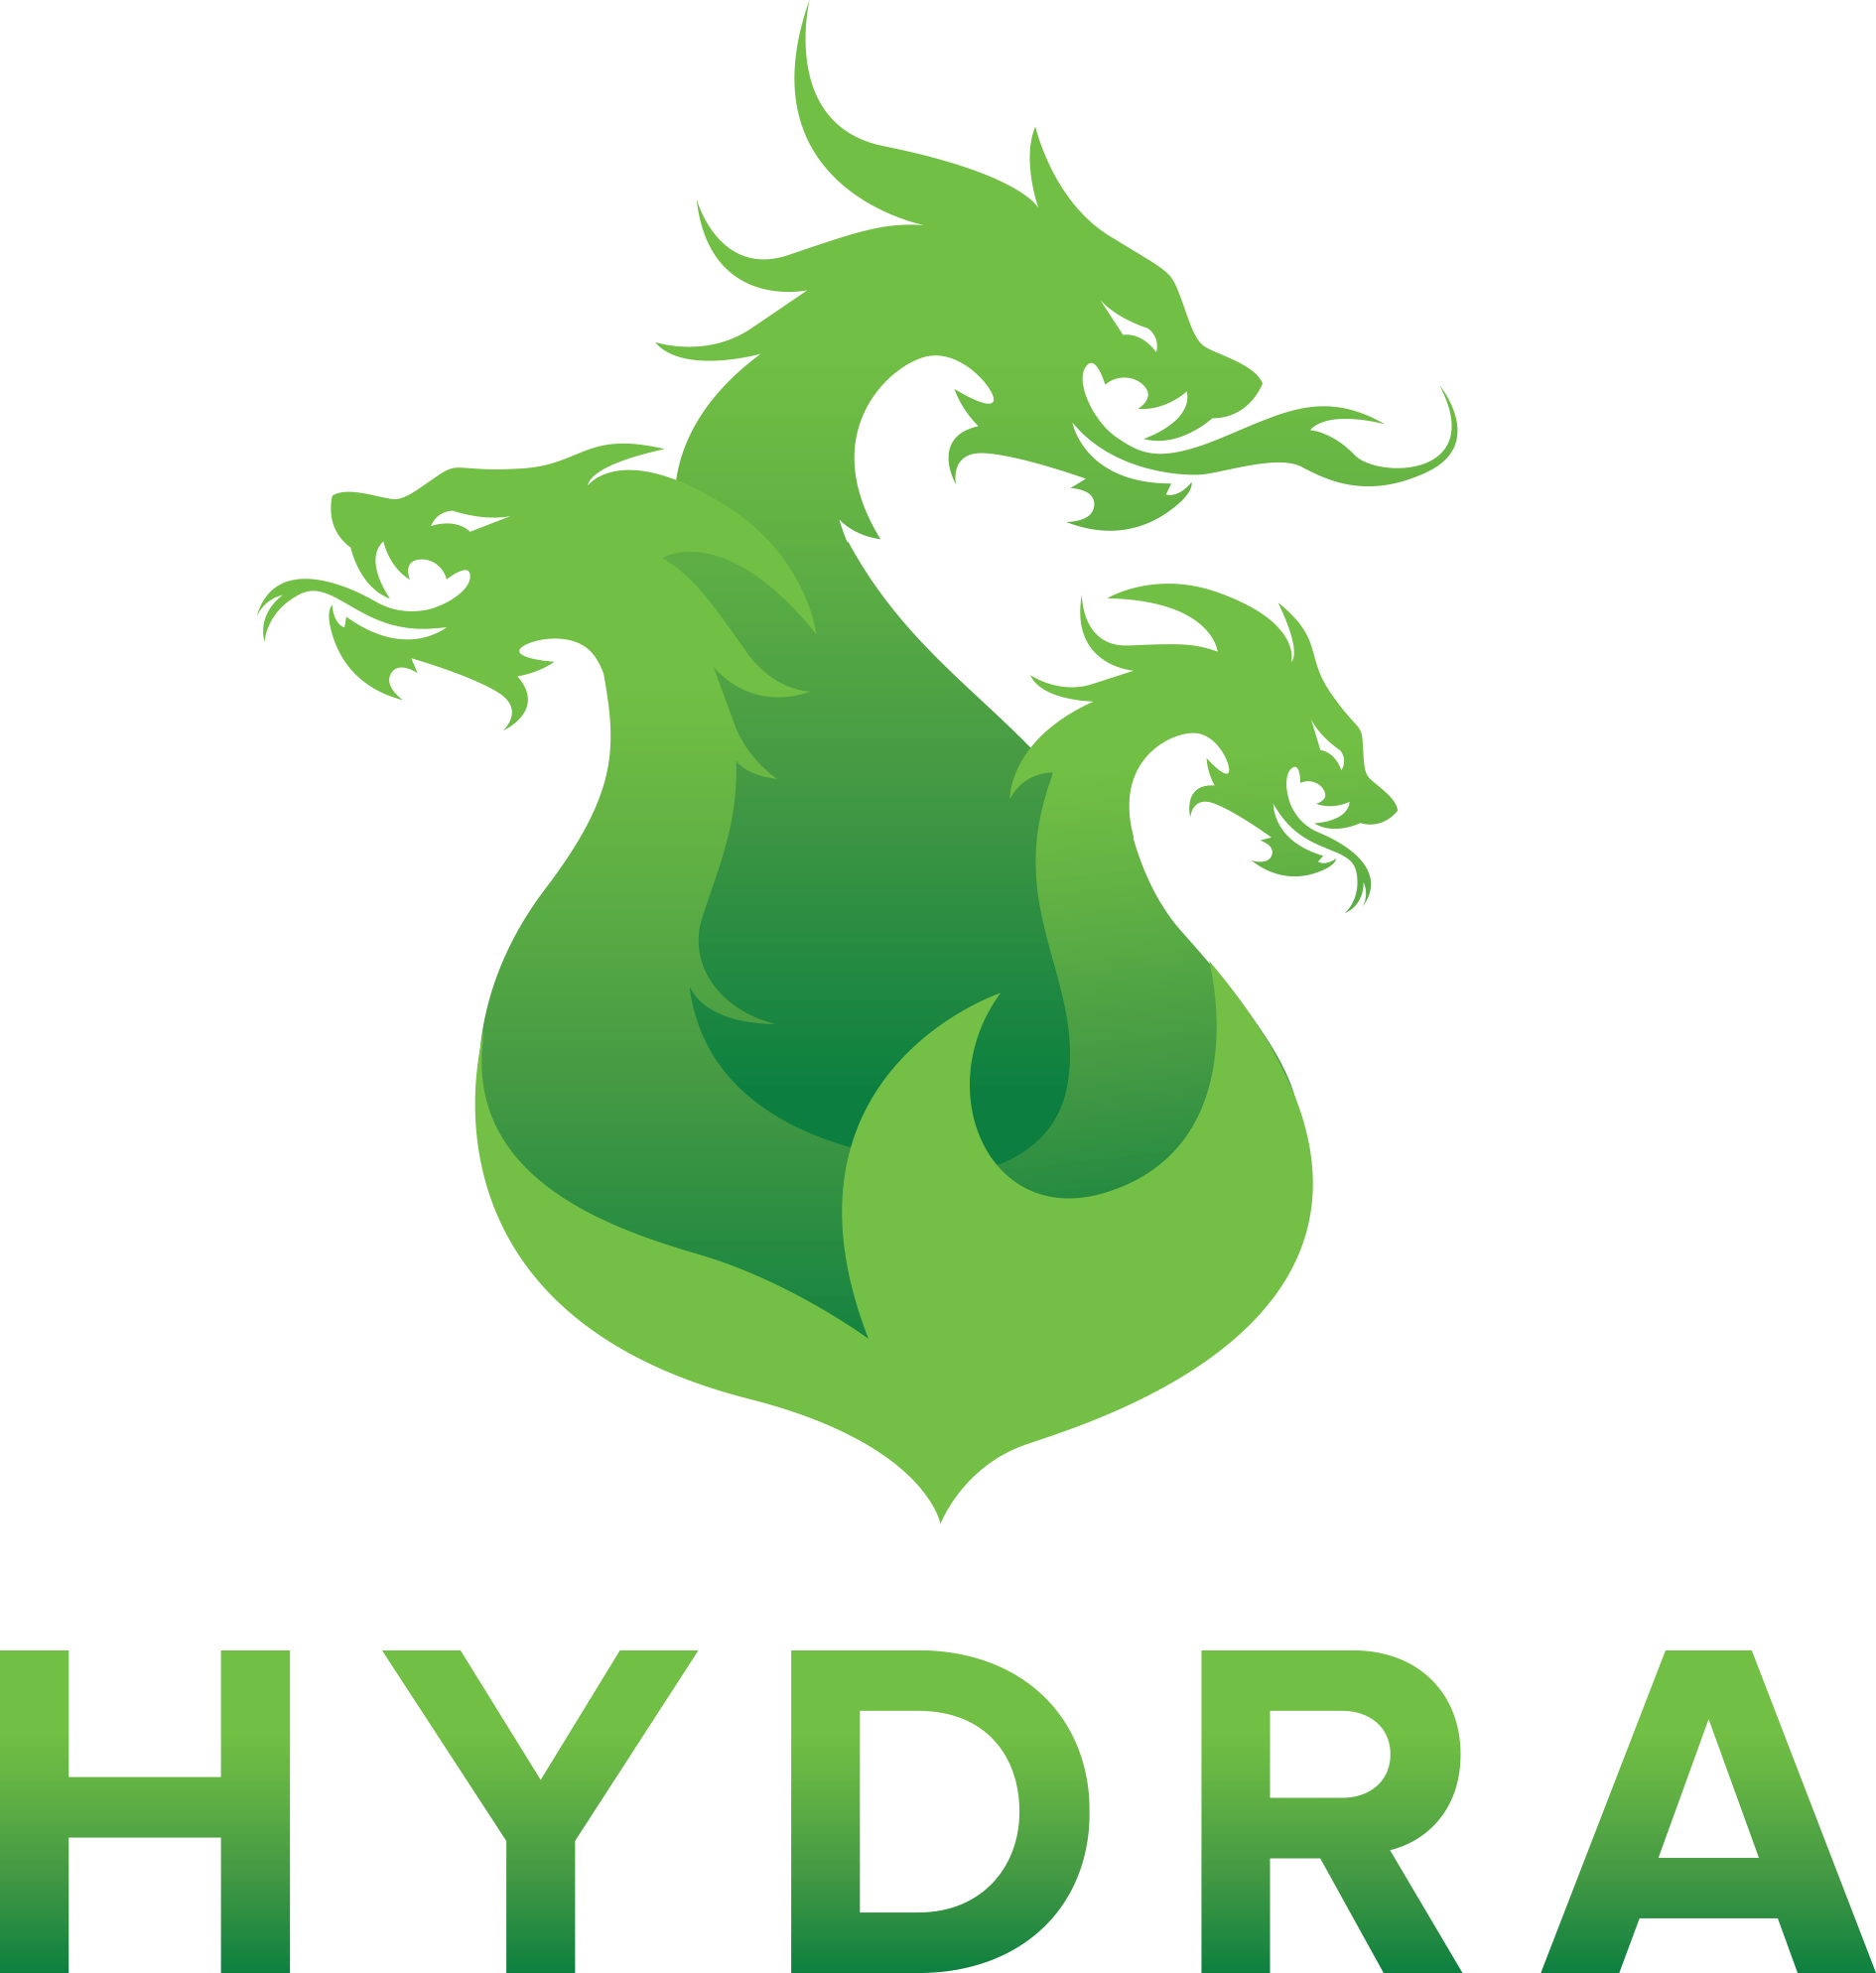 Hydra сайты linkshophydra даркнет официальный сайт заказать